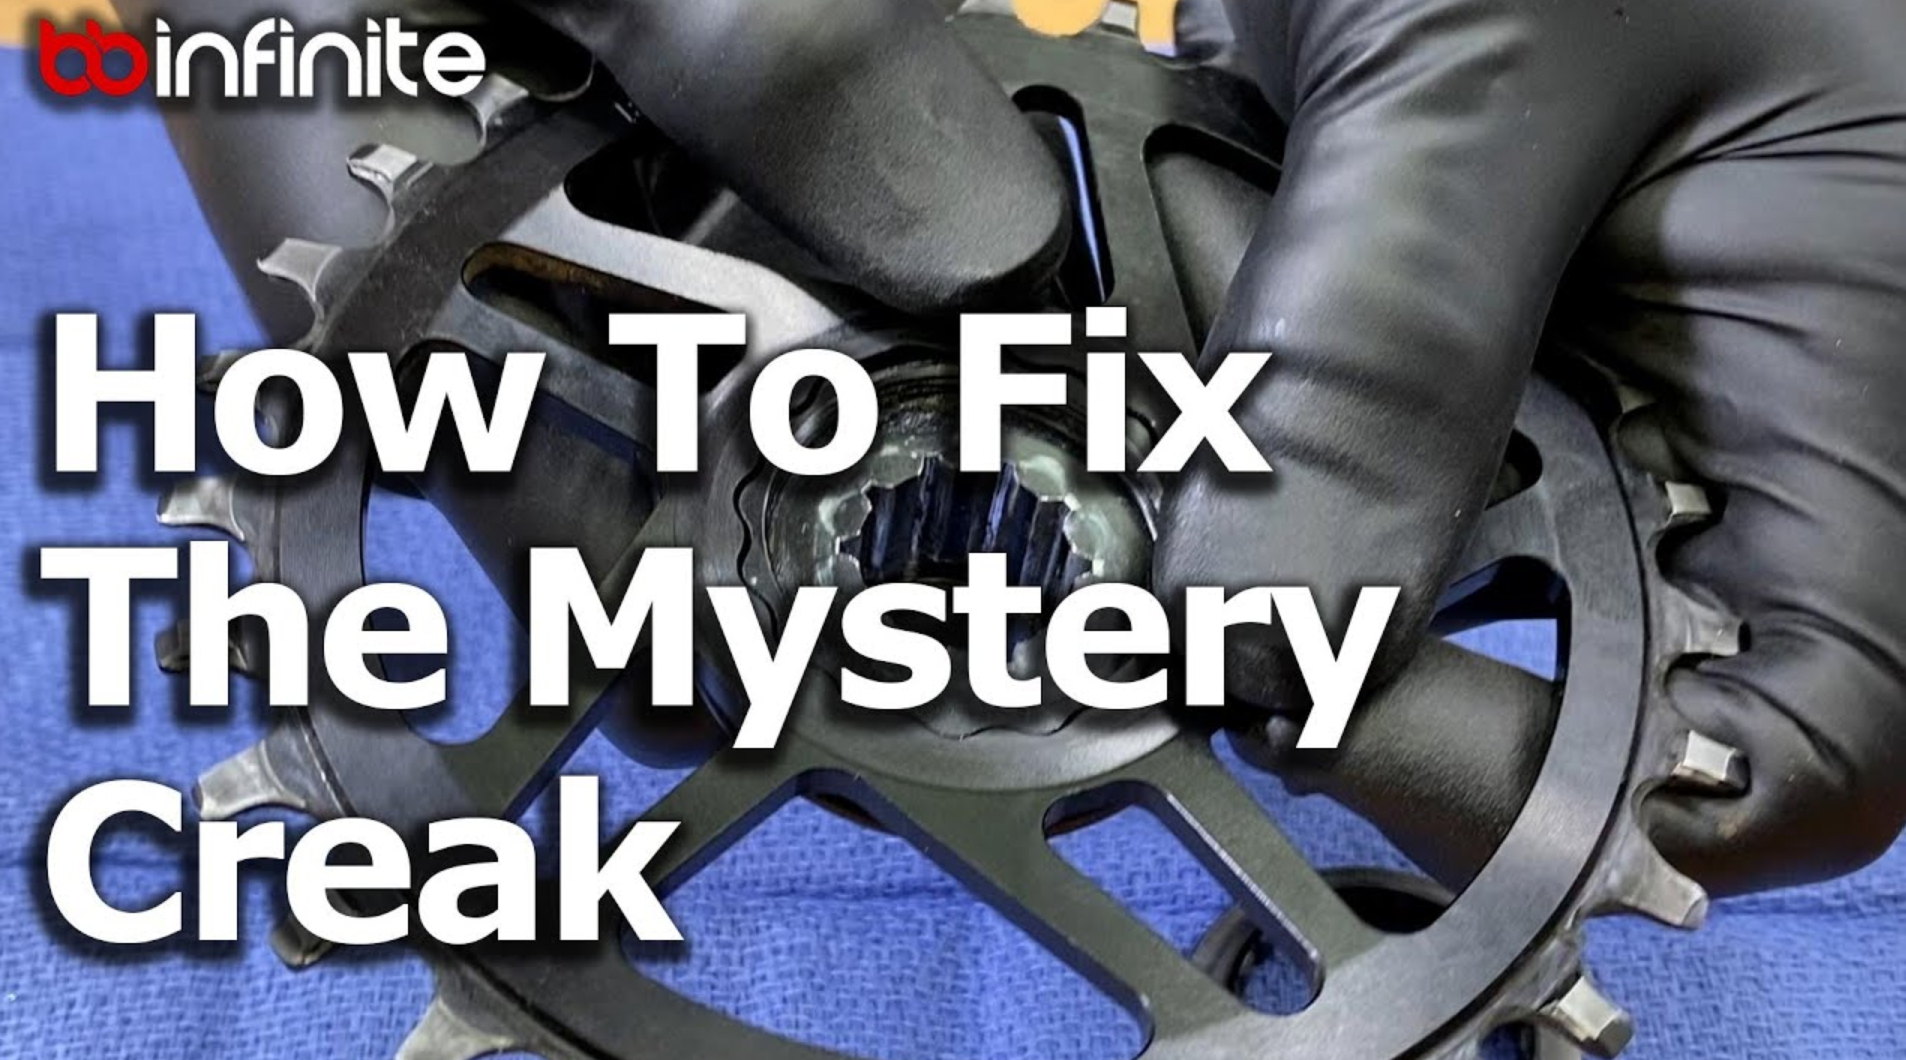 Cranks Creak Too: How to Fix The Mystery Creak